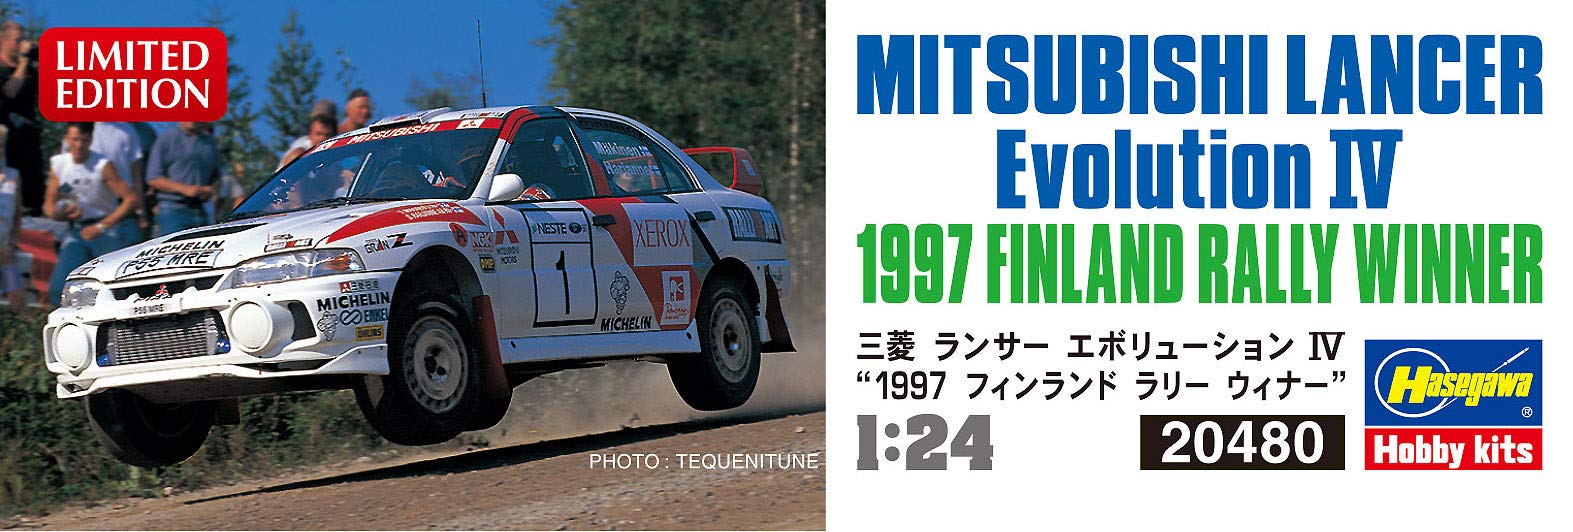 Hasegawa 1/24 Mitsubishi Lancer Evolution IV 1997 Finland Rally Winner Plastic Racing Car